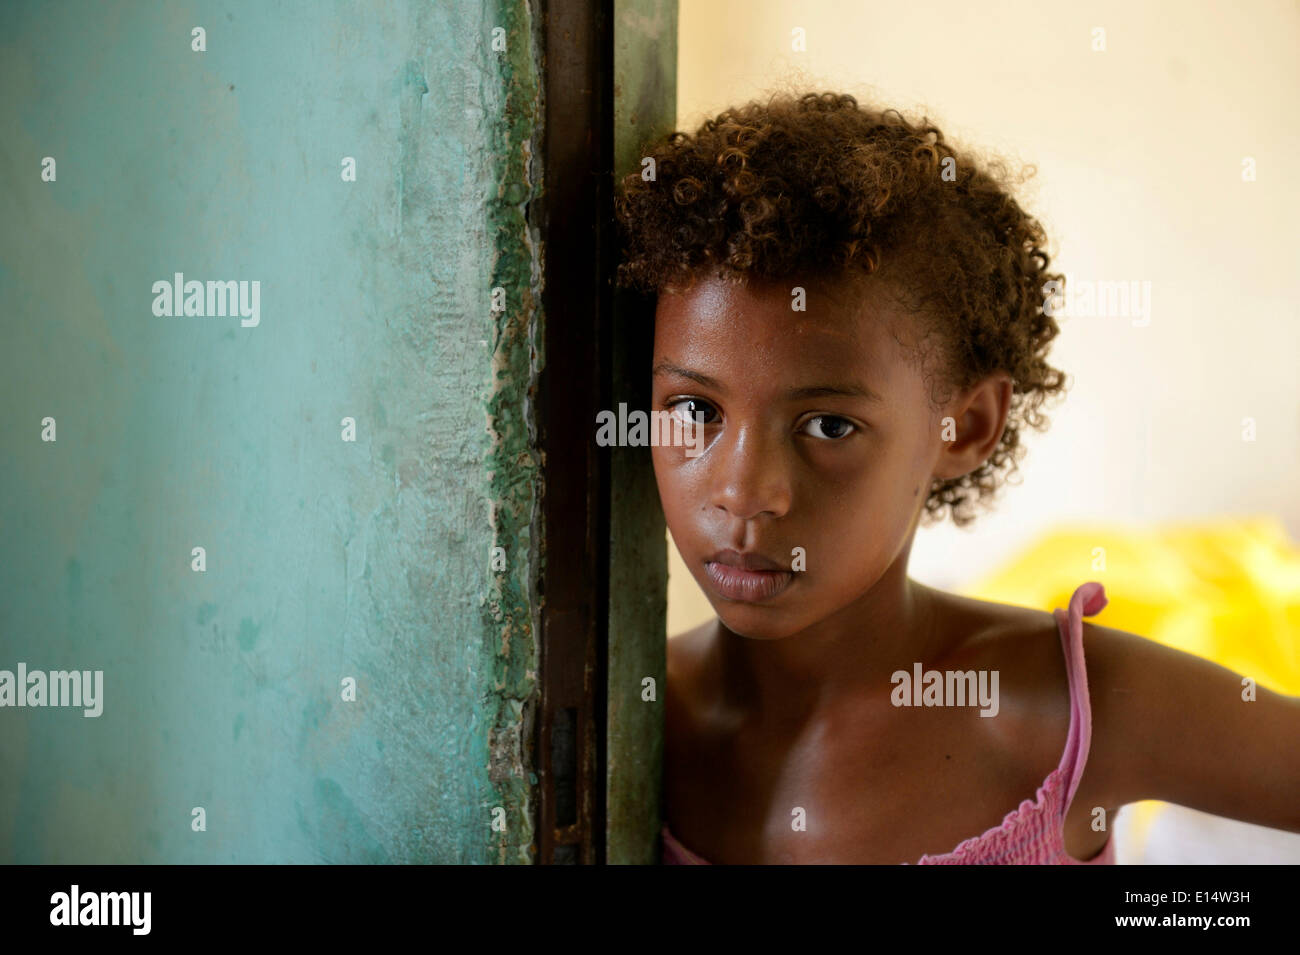 Girl, 10, serious expression, Senador Camara favela, Rio de Janeiro, Rio de Janeiro State, Brazil Stock Photo